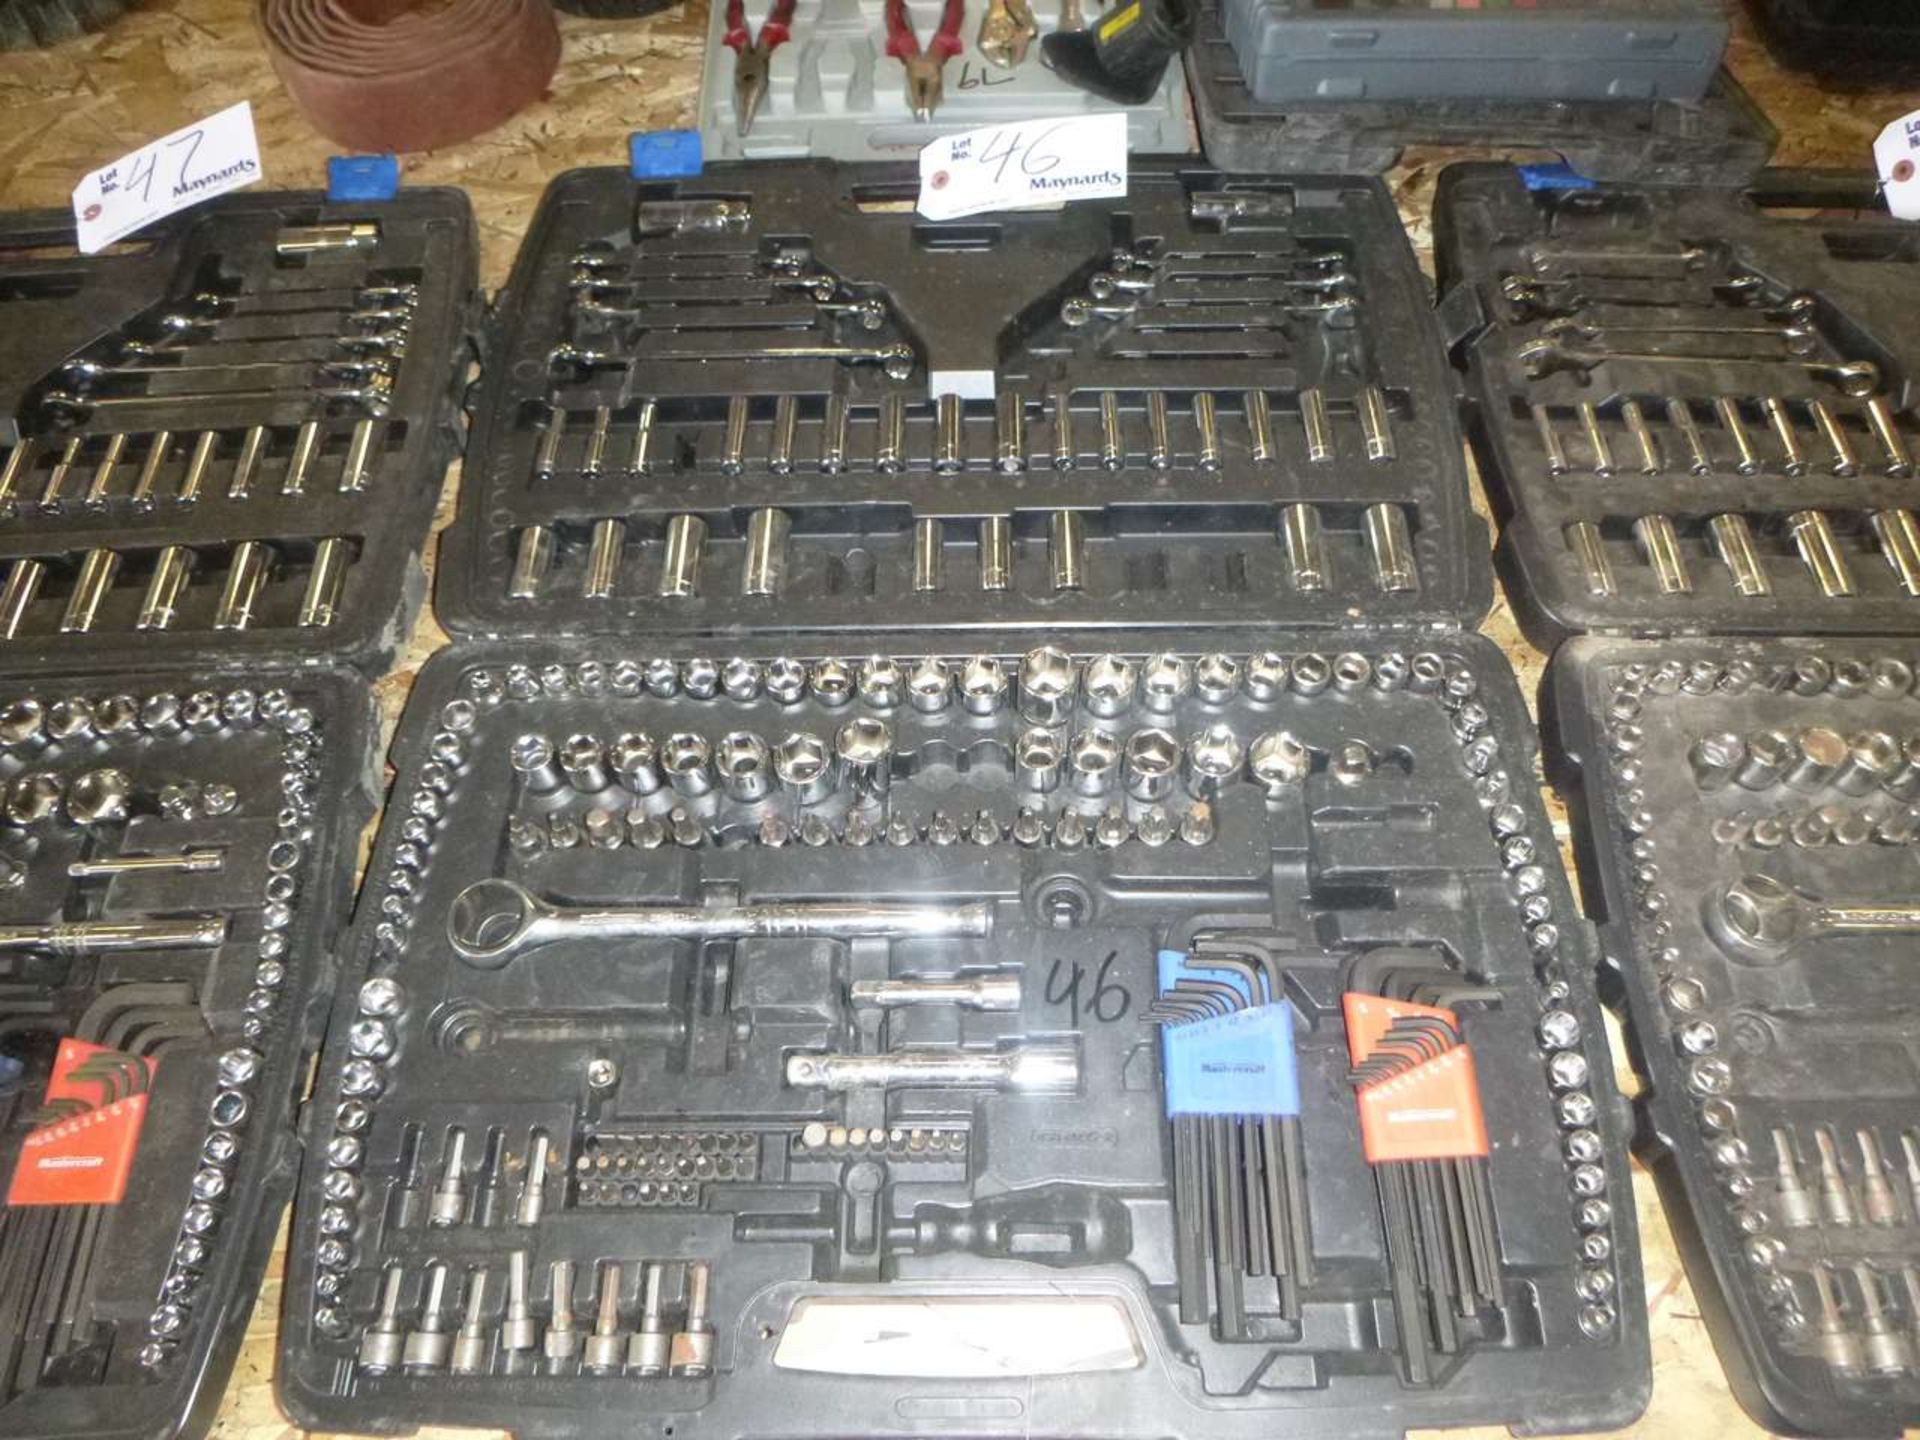 Mastercraft Tool Kit